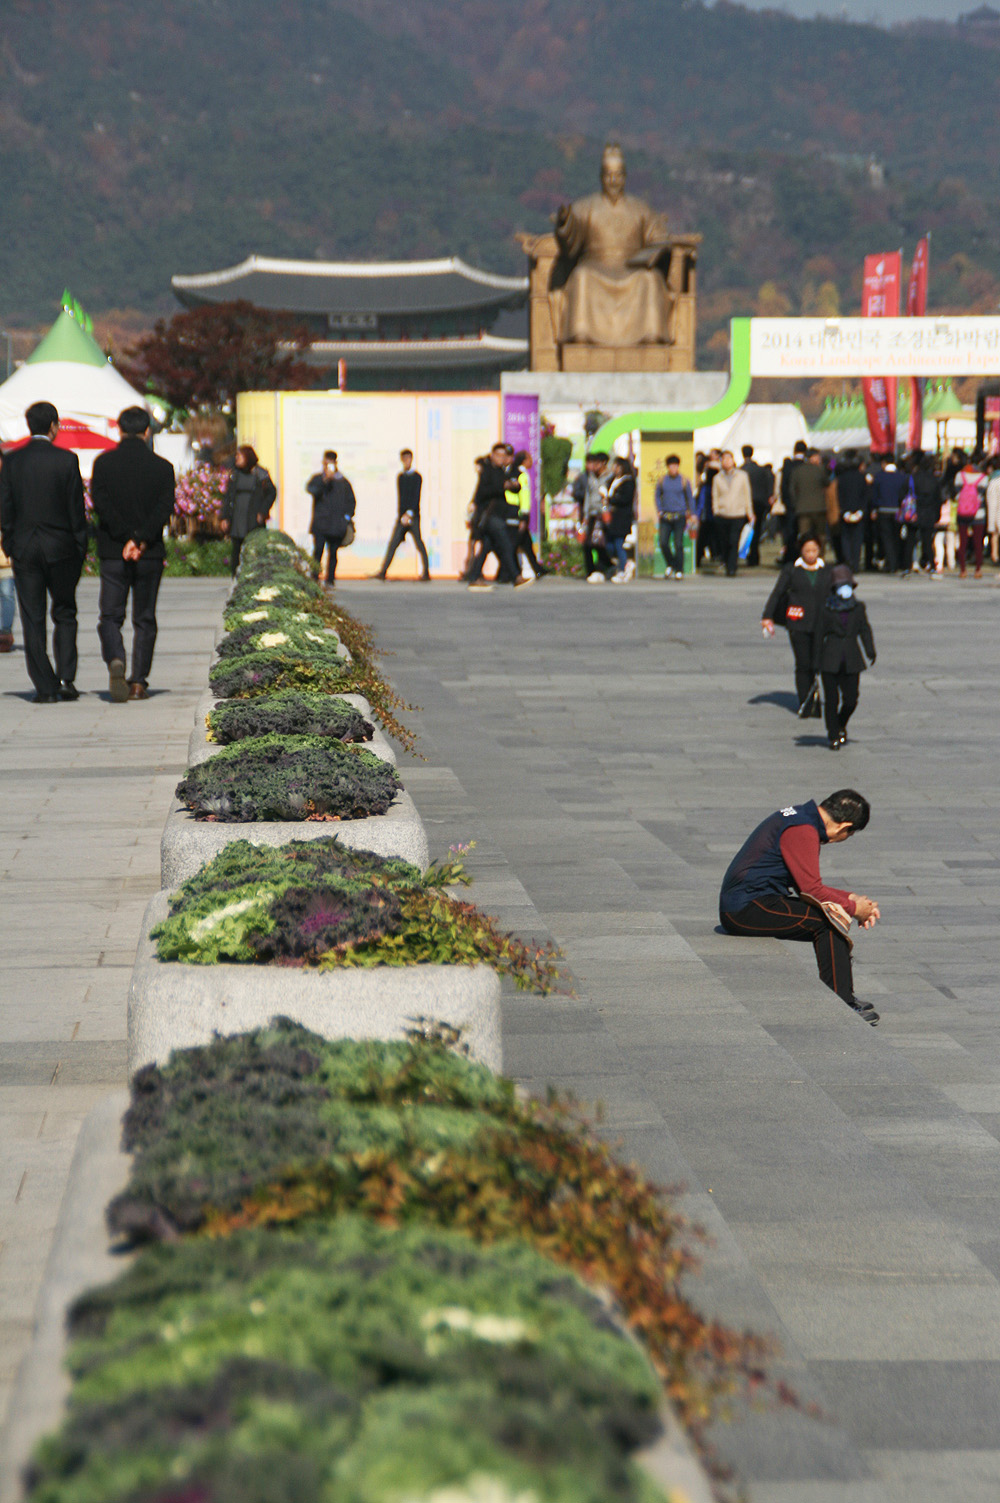 gwanghwamun square king sejong